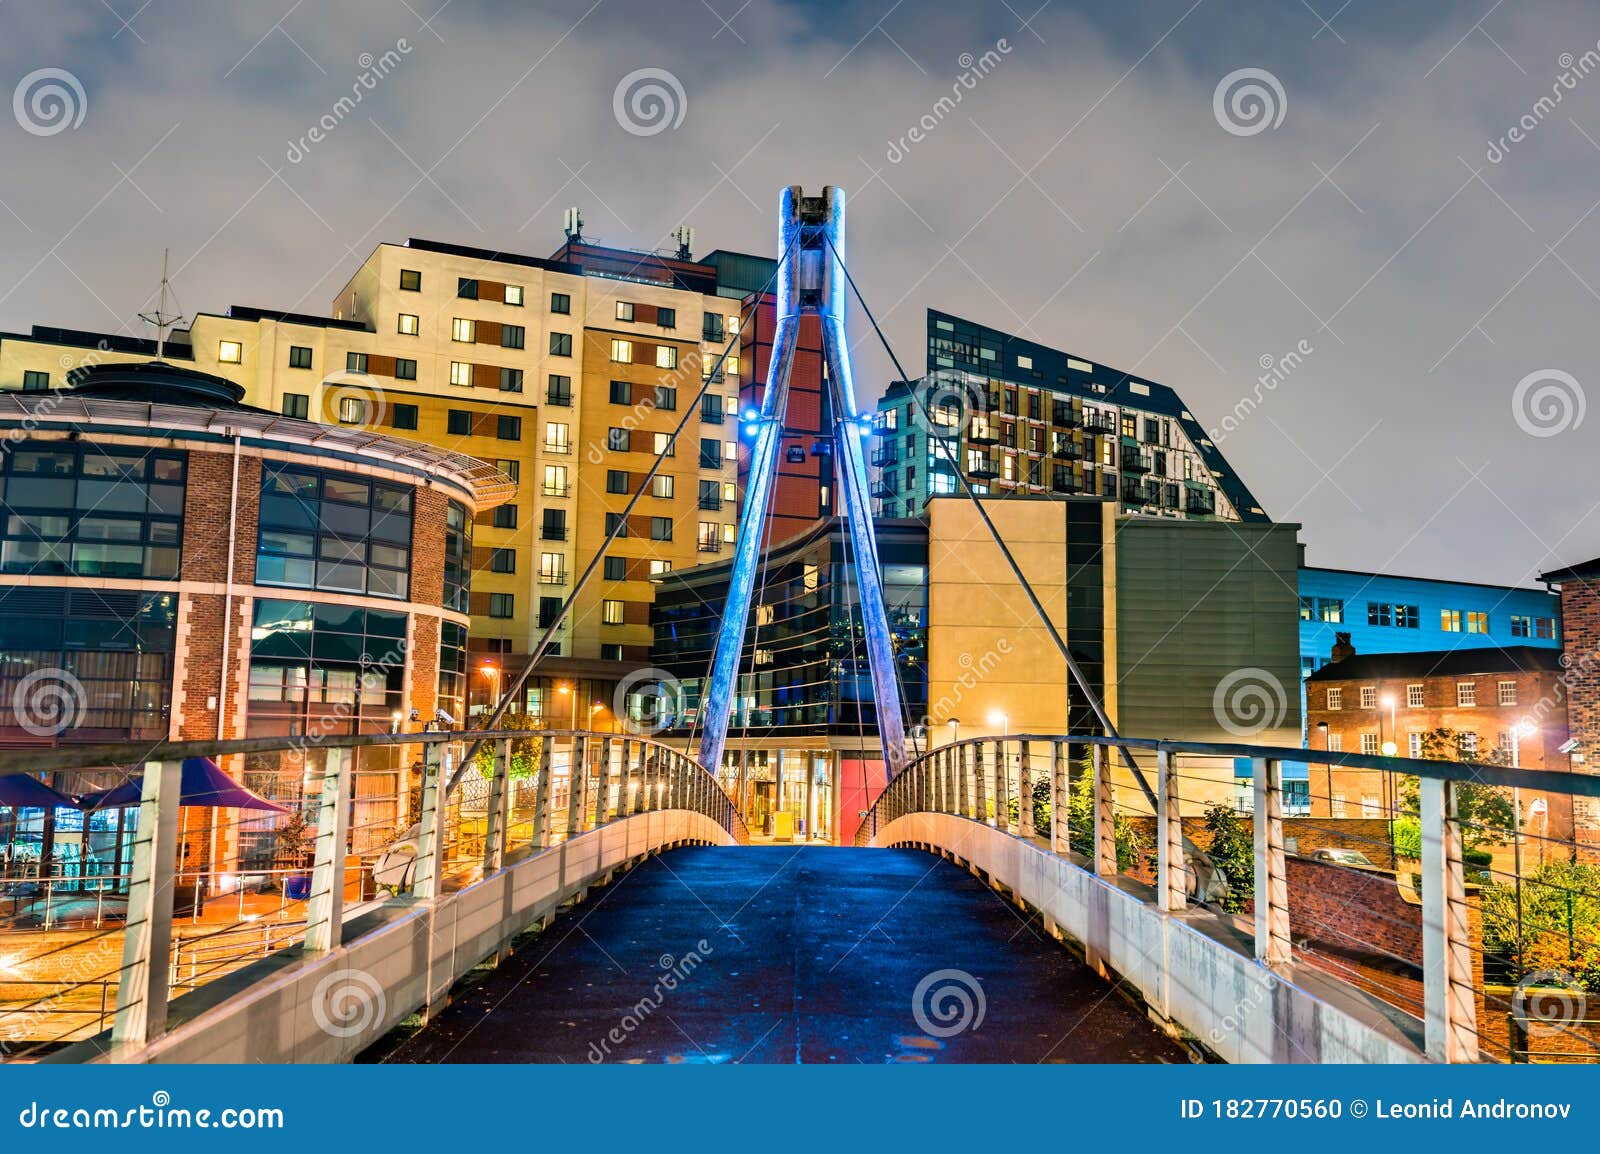 footbridge across the aire river in leeds, england